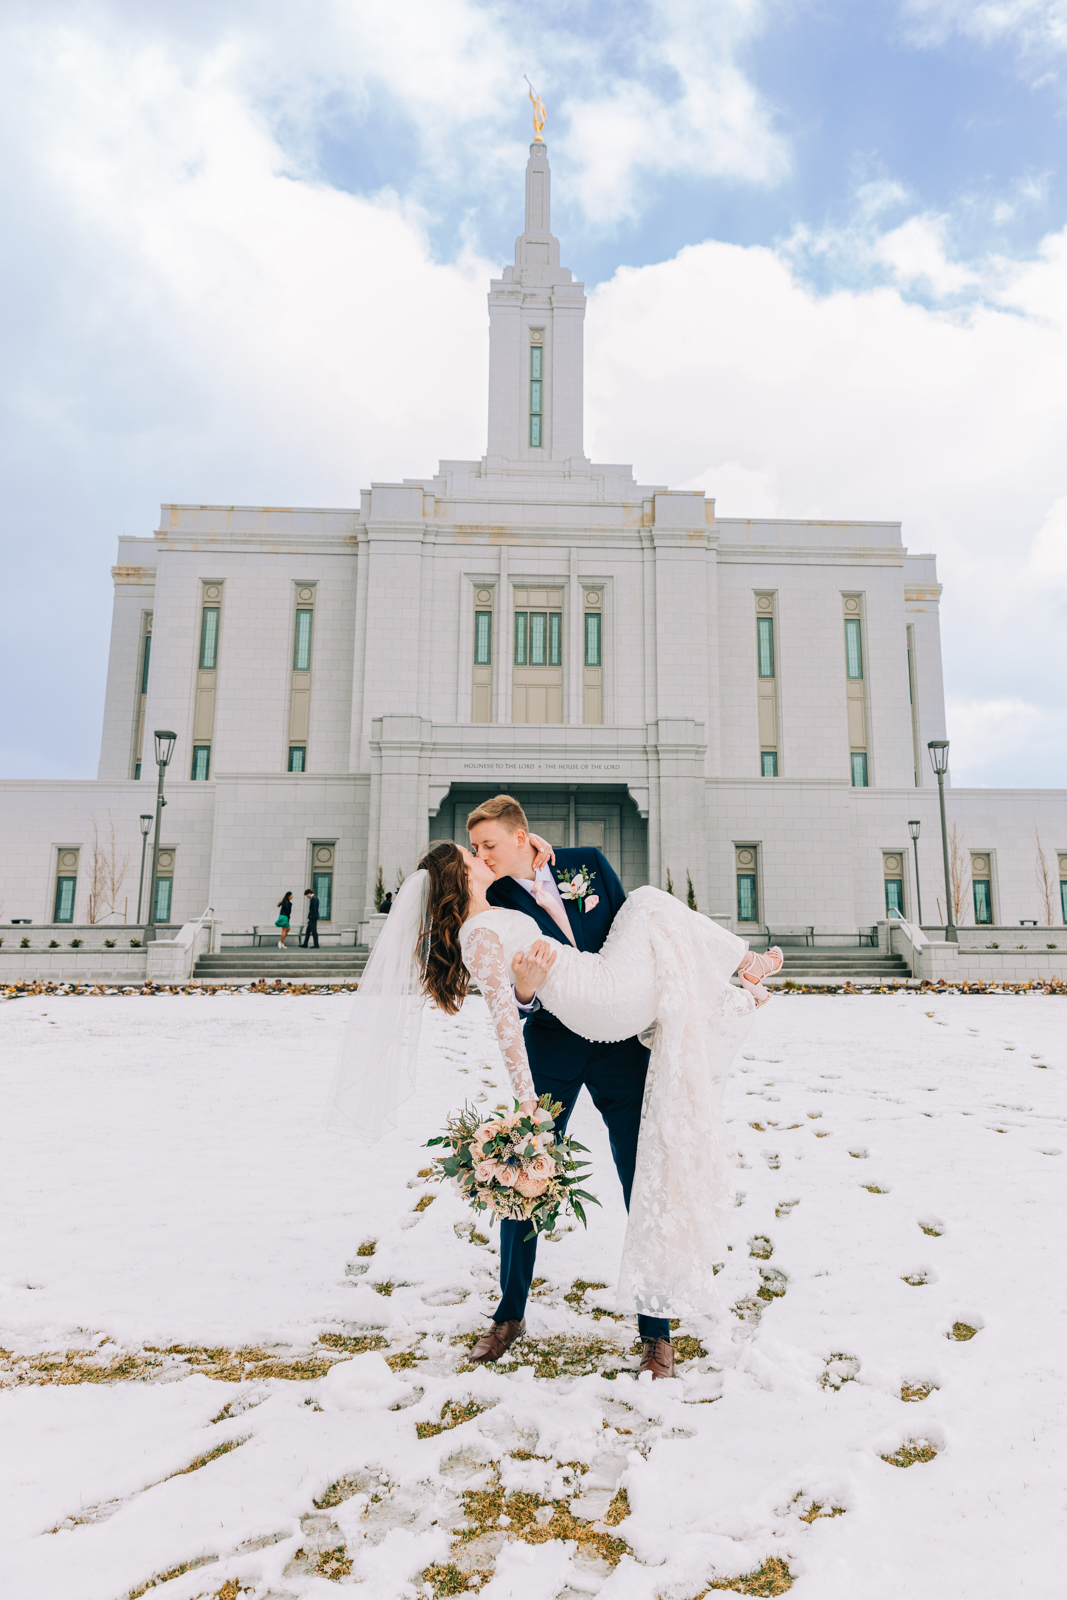 Jackson Hole wedding photographer captures bride and groom kiss snowy grounds